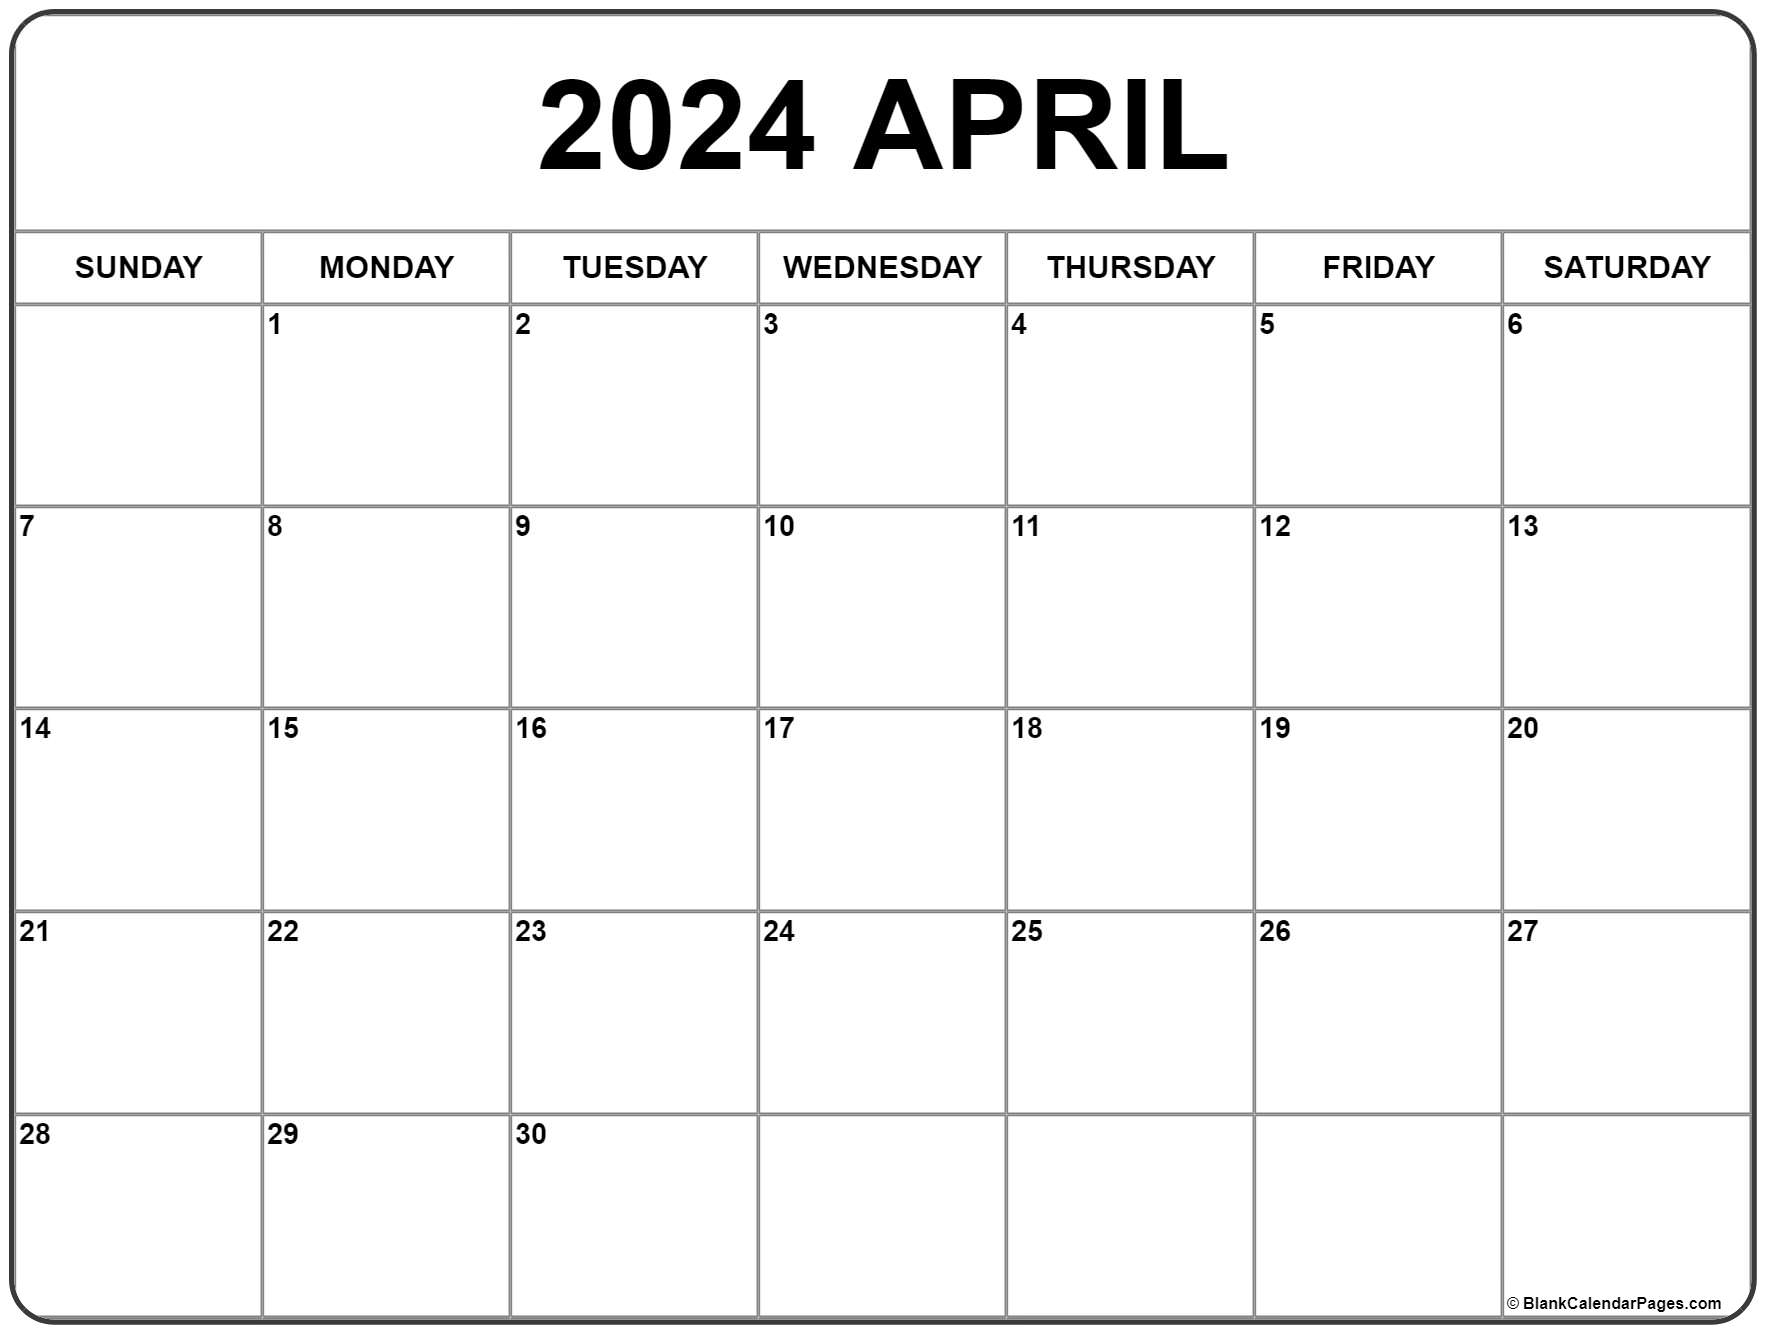 April 2024 Calendar | Free Printable Calendar with April Calender 2024